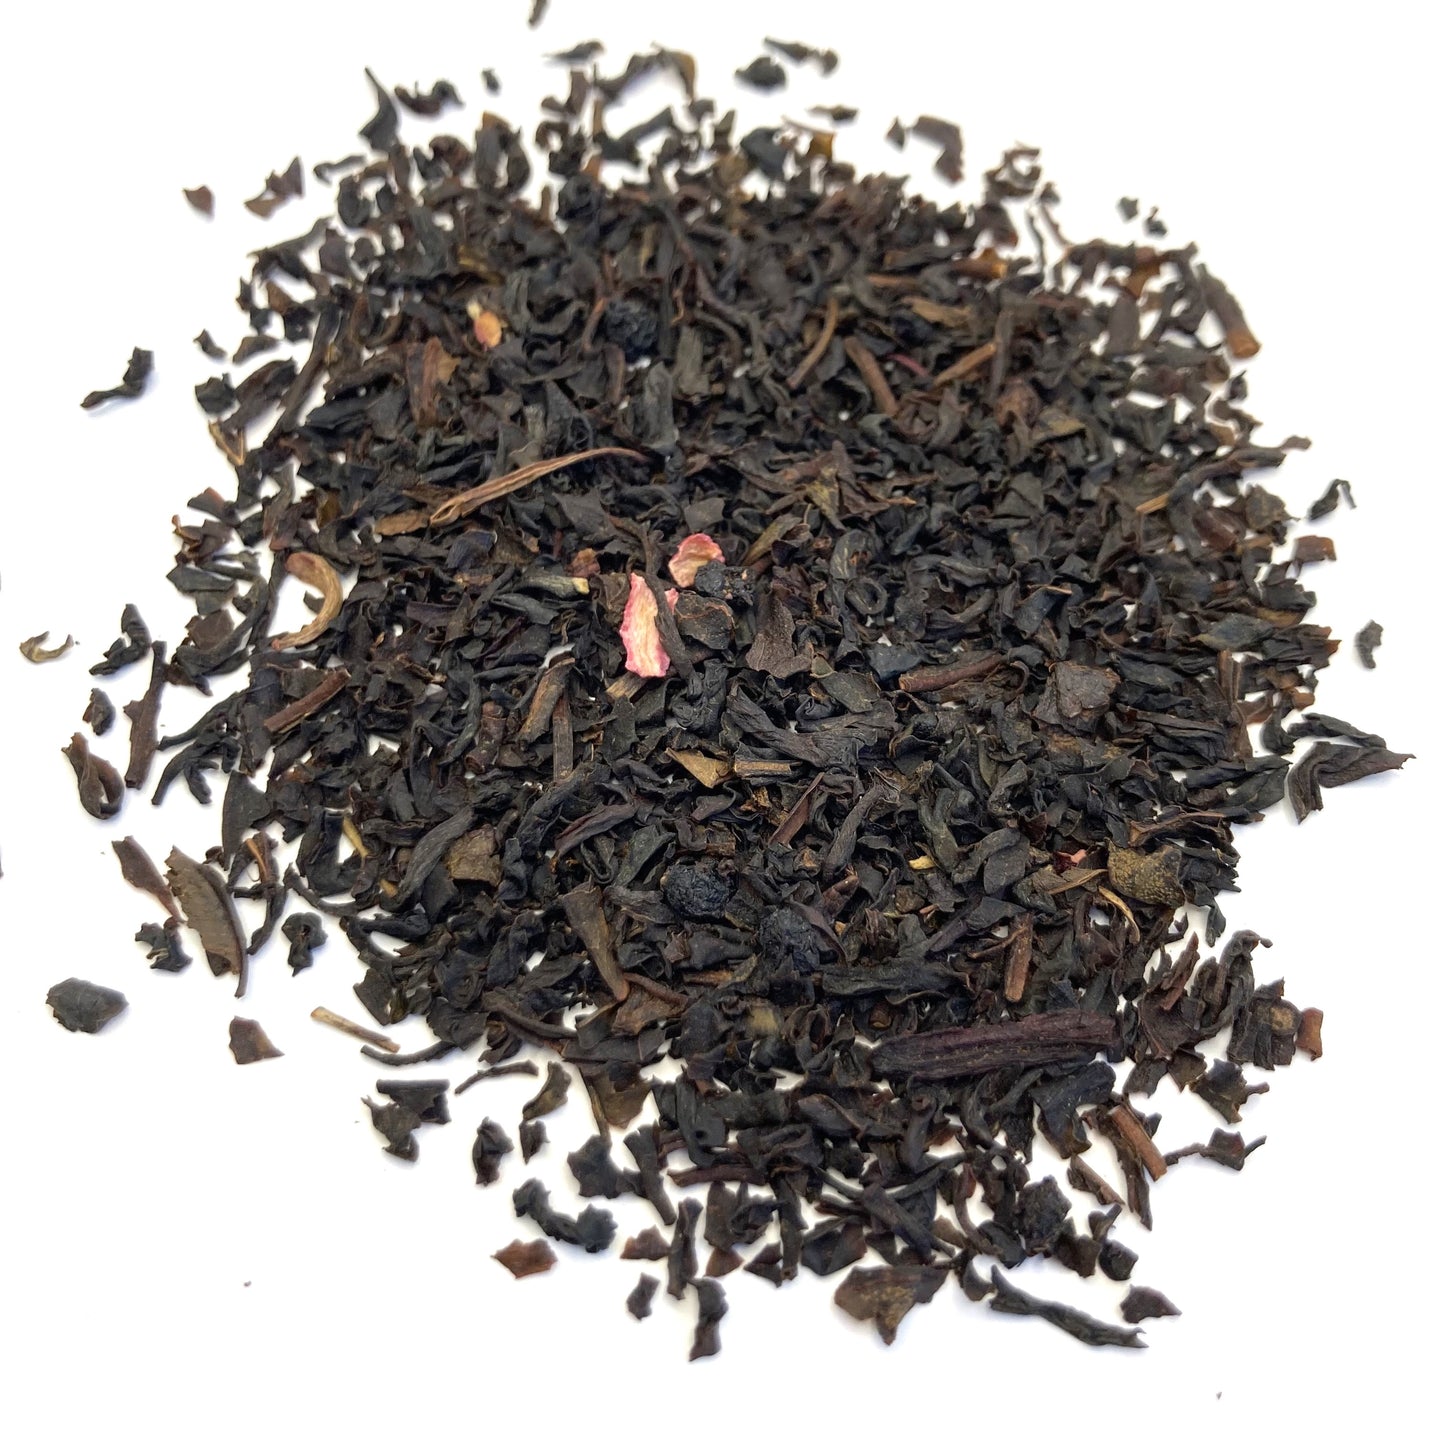 Wild Elderberry Black Tea